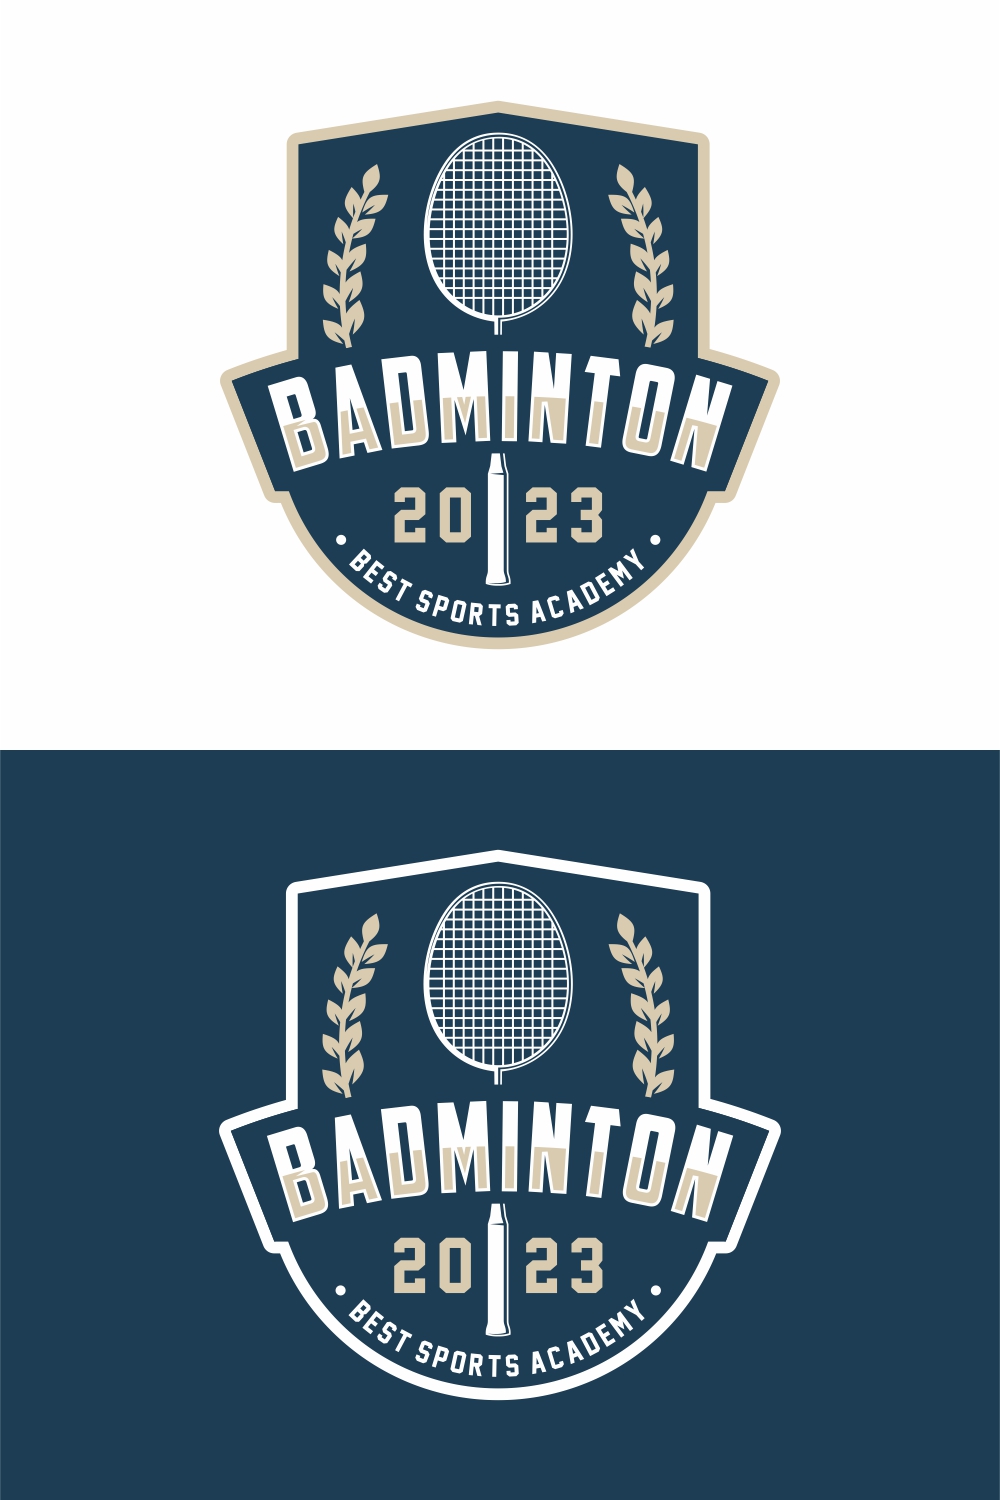 Badminton Logo Design Vector – Only $7 pinterest preview image.